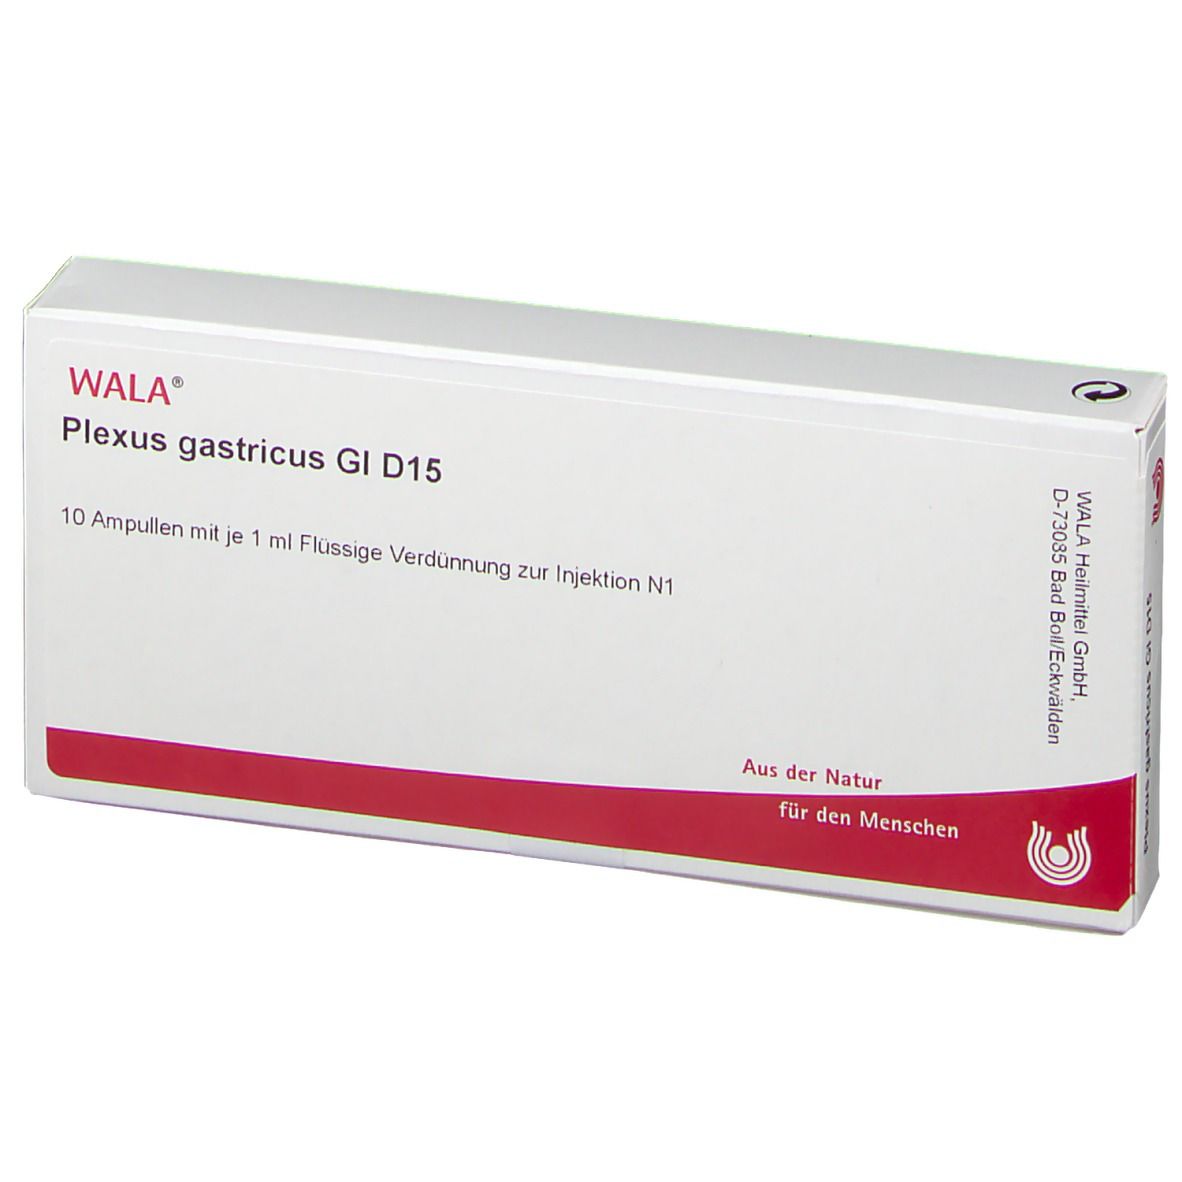 WALA® Plexus gastricus Gl D 15